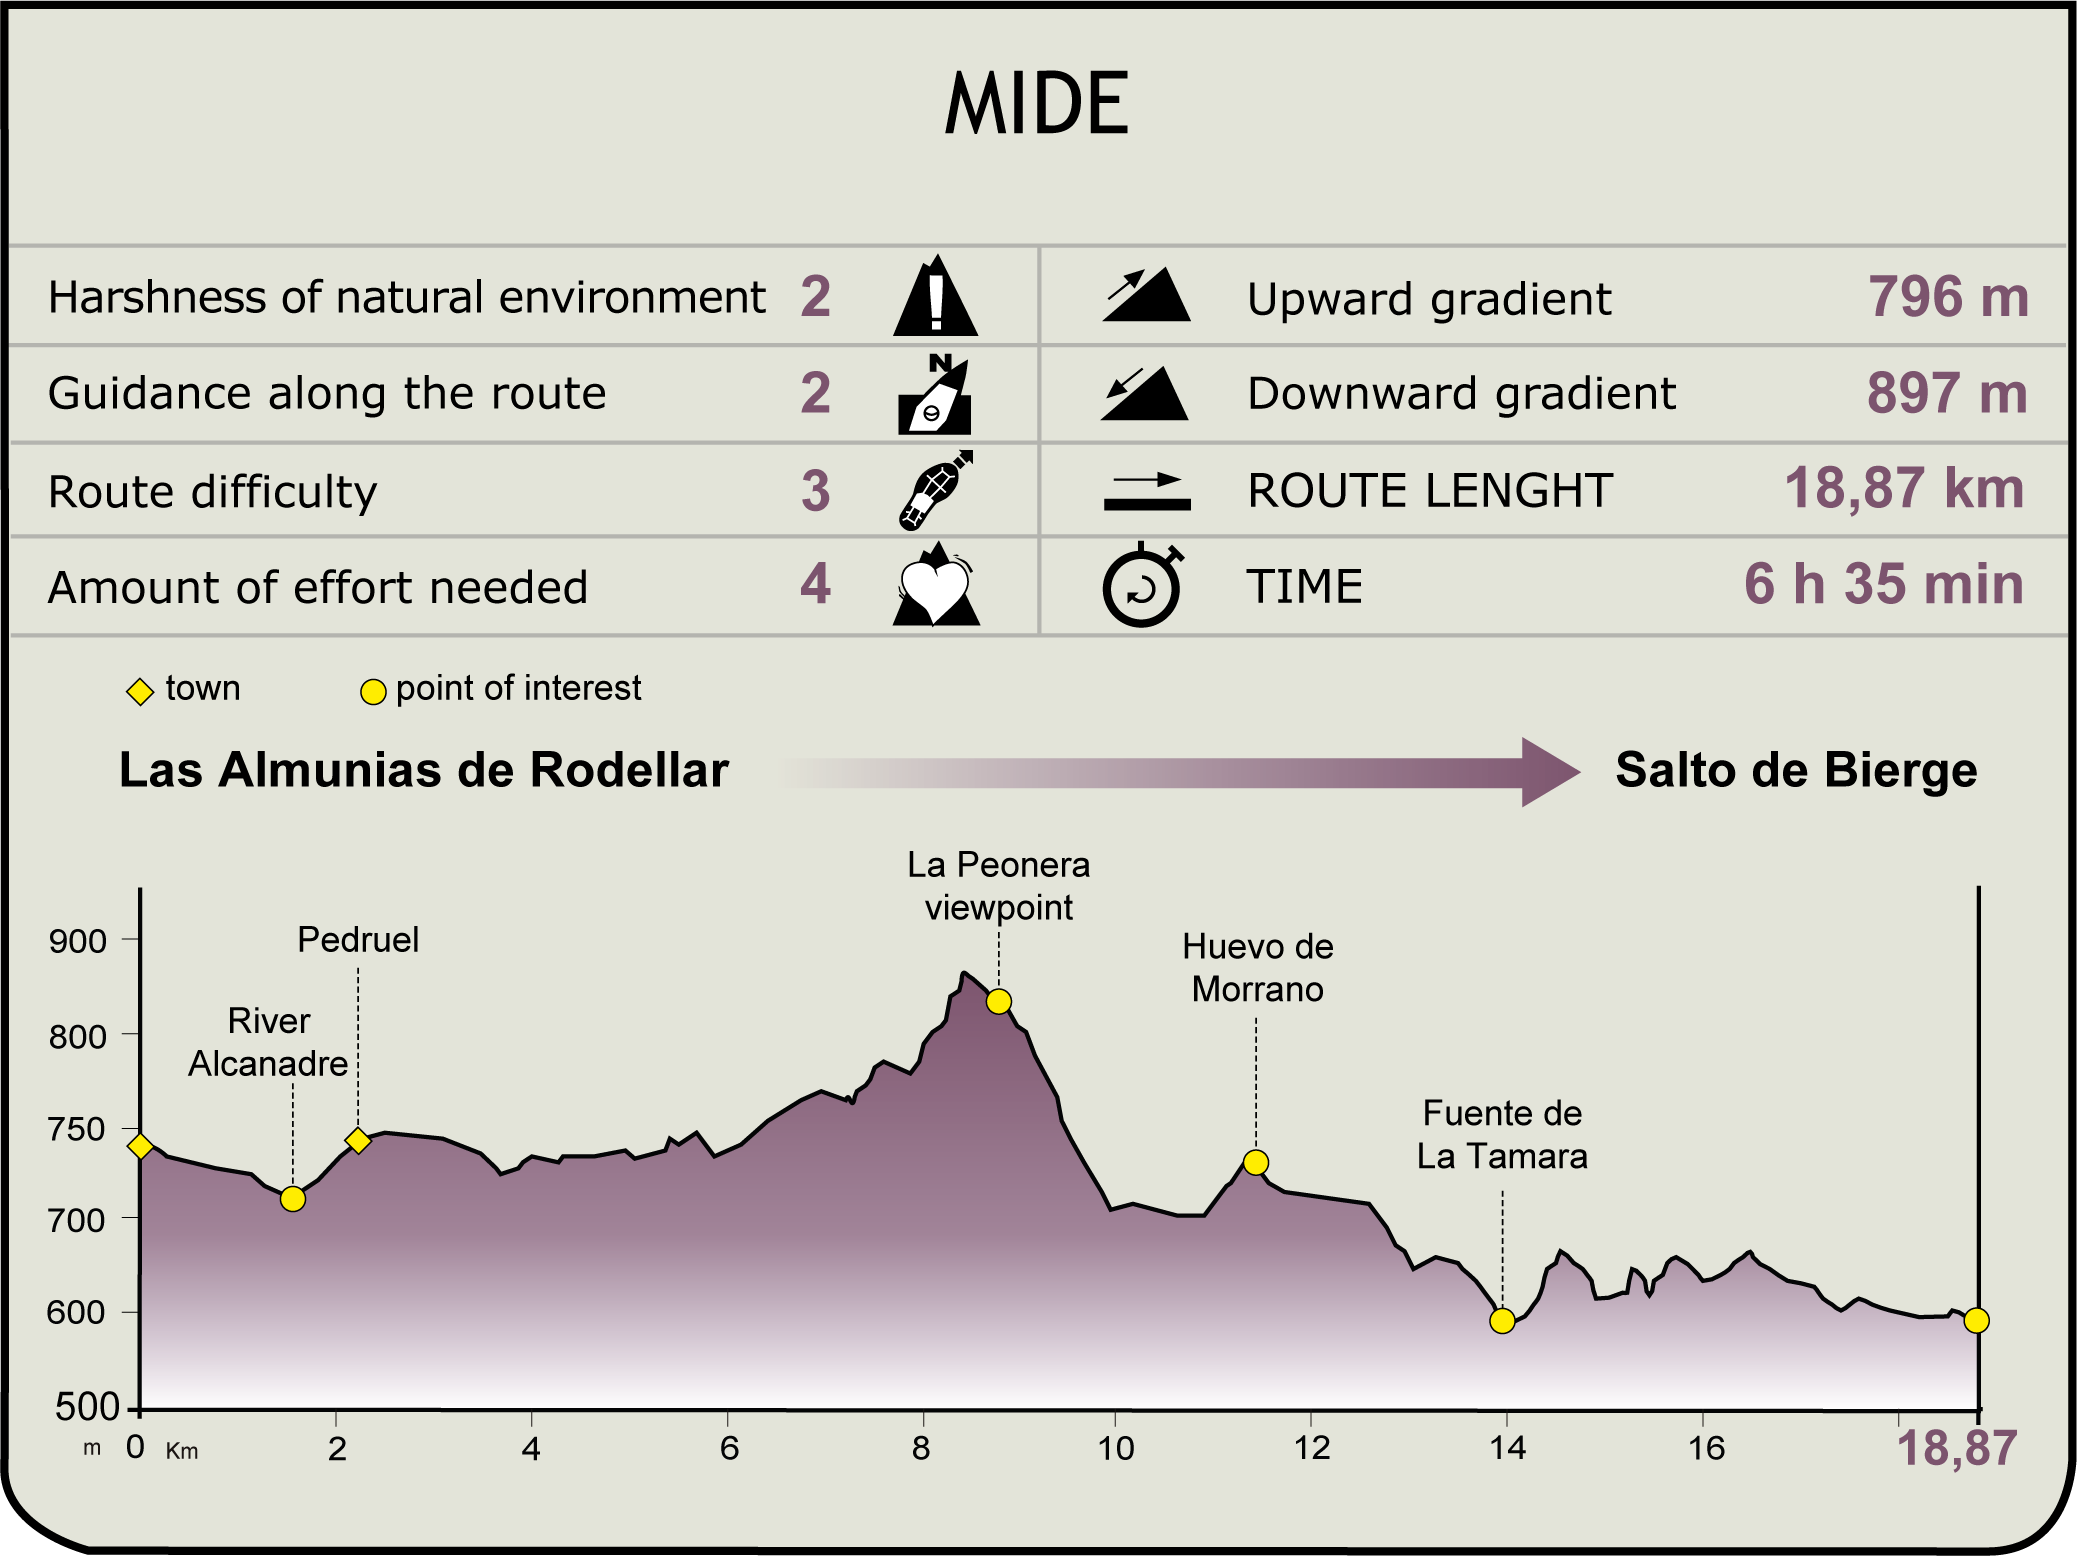 MIDE profile of Somontano de Barbastro NT. Stage 3